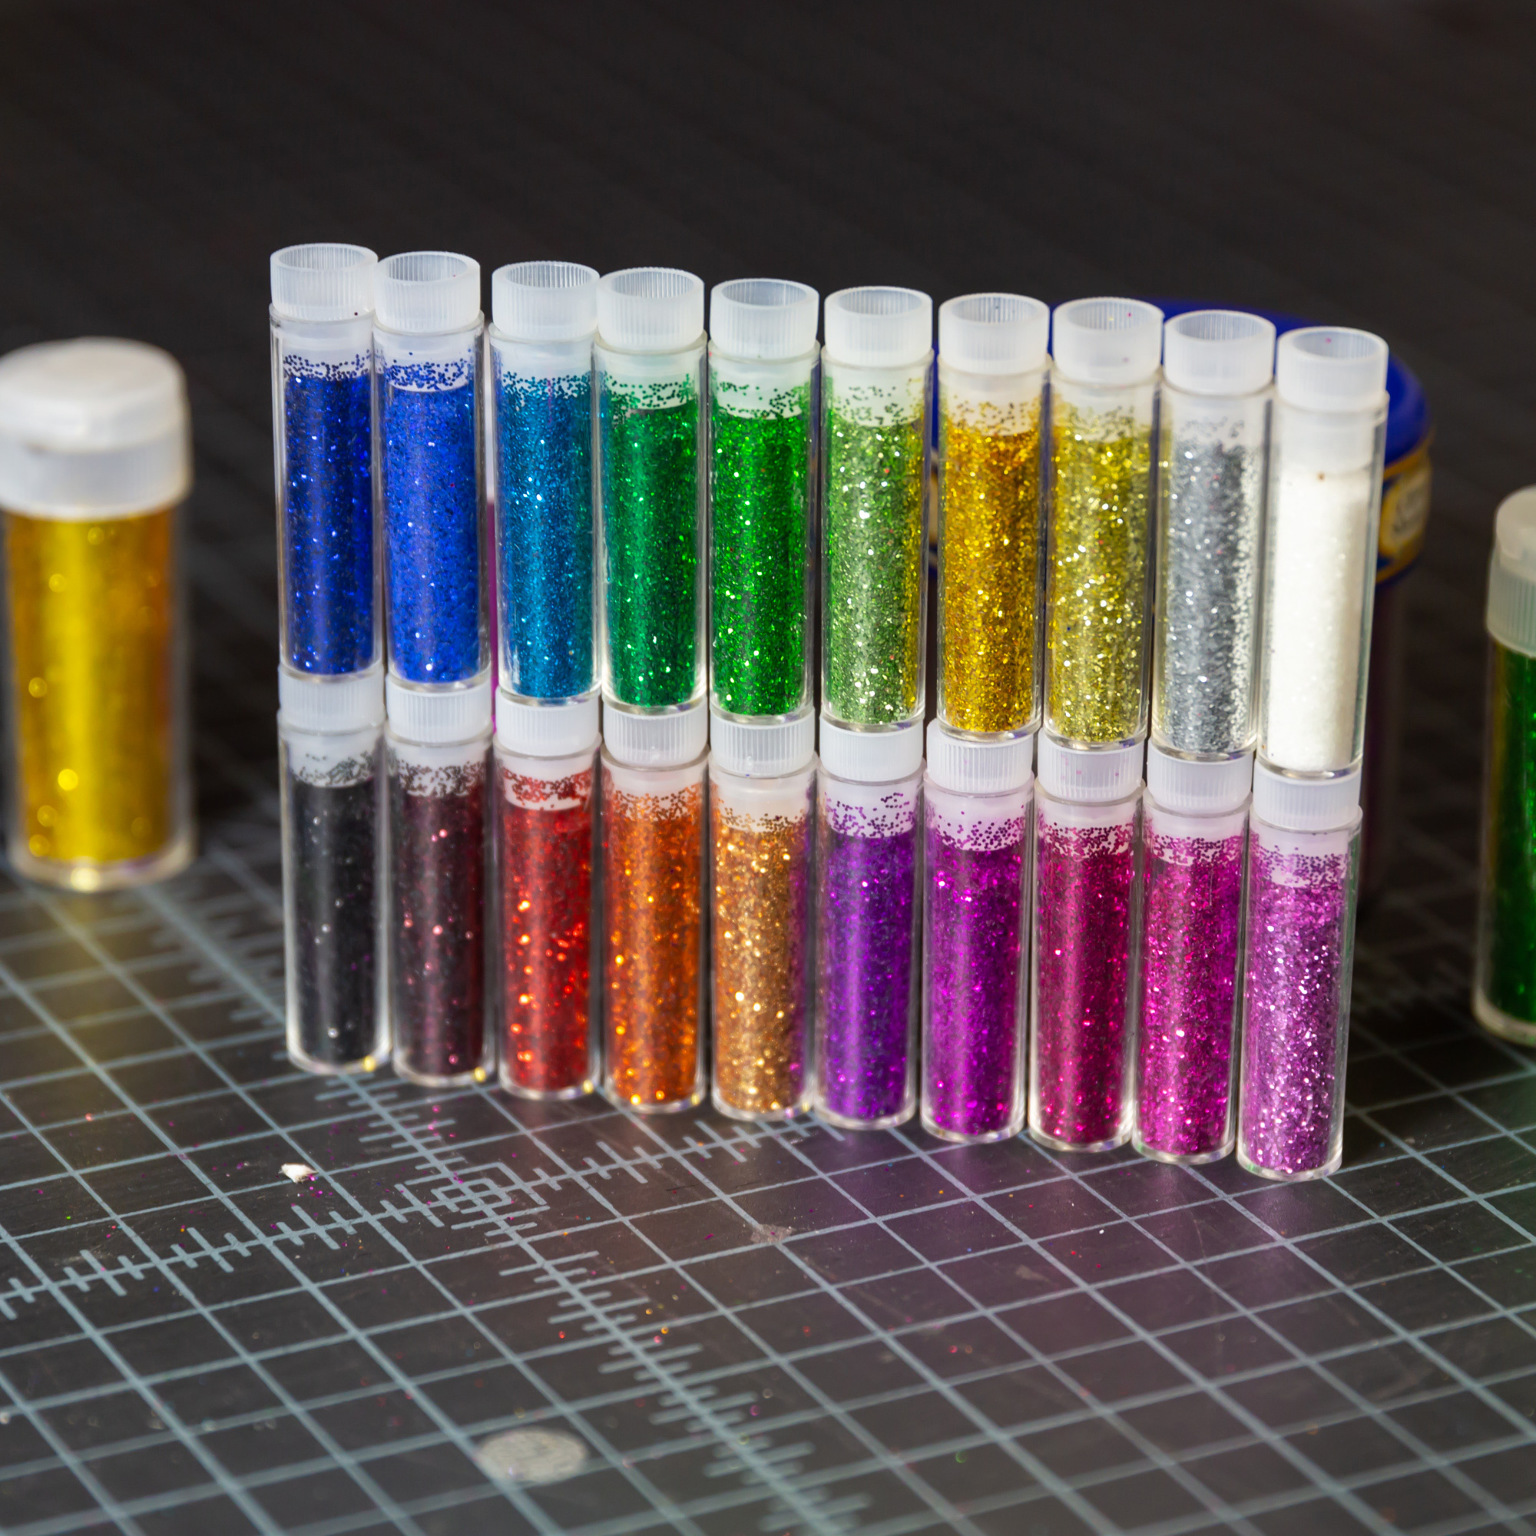 Wholesale Glitter Glue (6 Colors) 4 oz Bottles - DollarDays